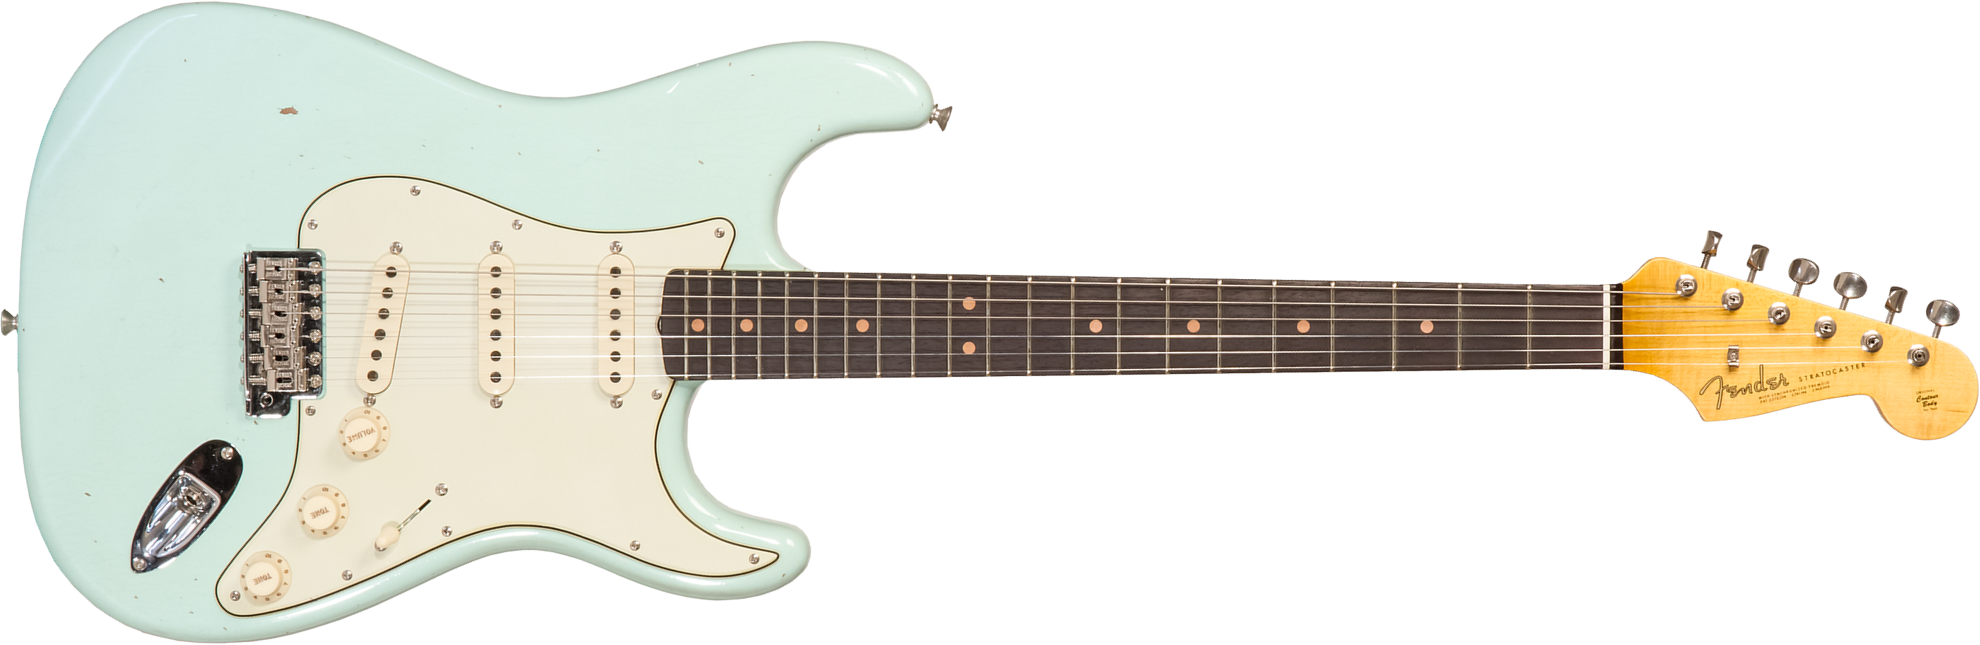 Fender Custom Shop Strat 1964 3s Trem Rw #cz570381 - Journeyman Relic Aged Surf Green - Guitarra eléctrica con forma de str. - Main picture